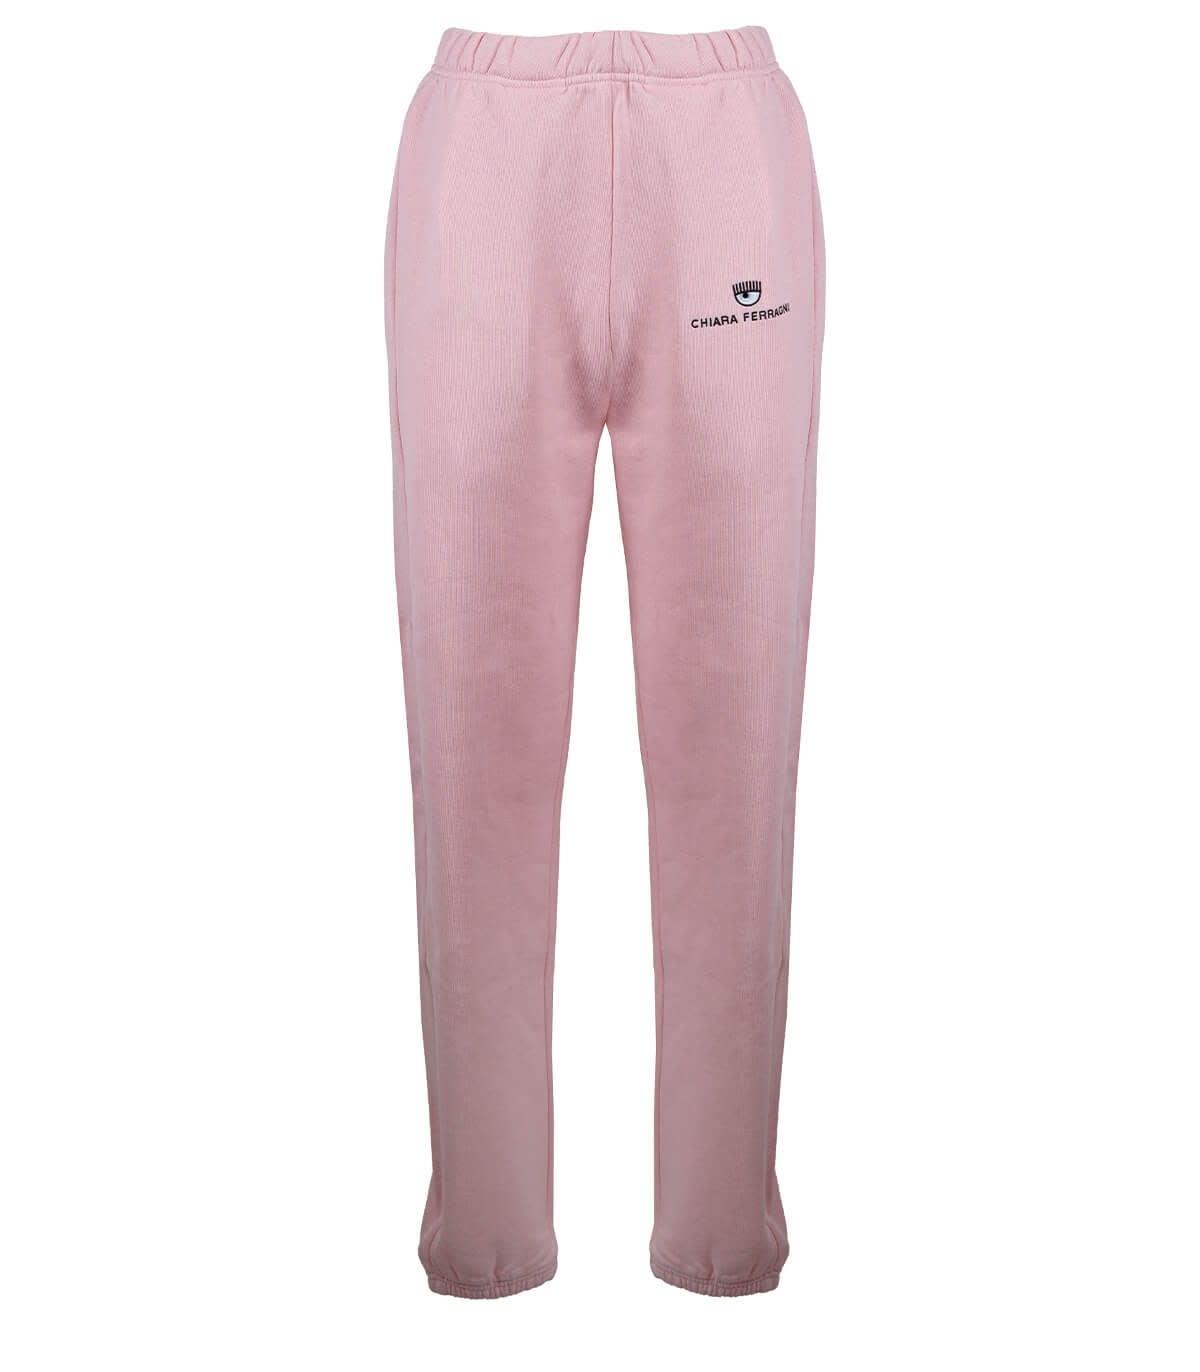 Chiara Ferragni Logo Basic Sweatpants in Pink - Save 55% - Lyst